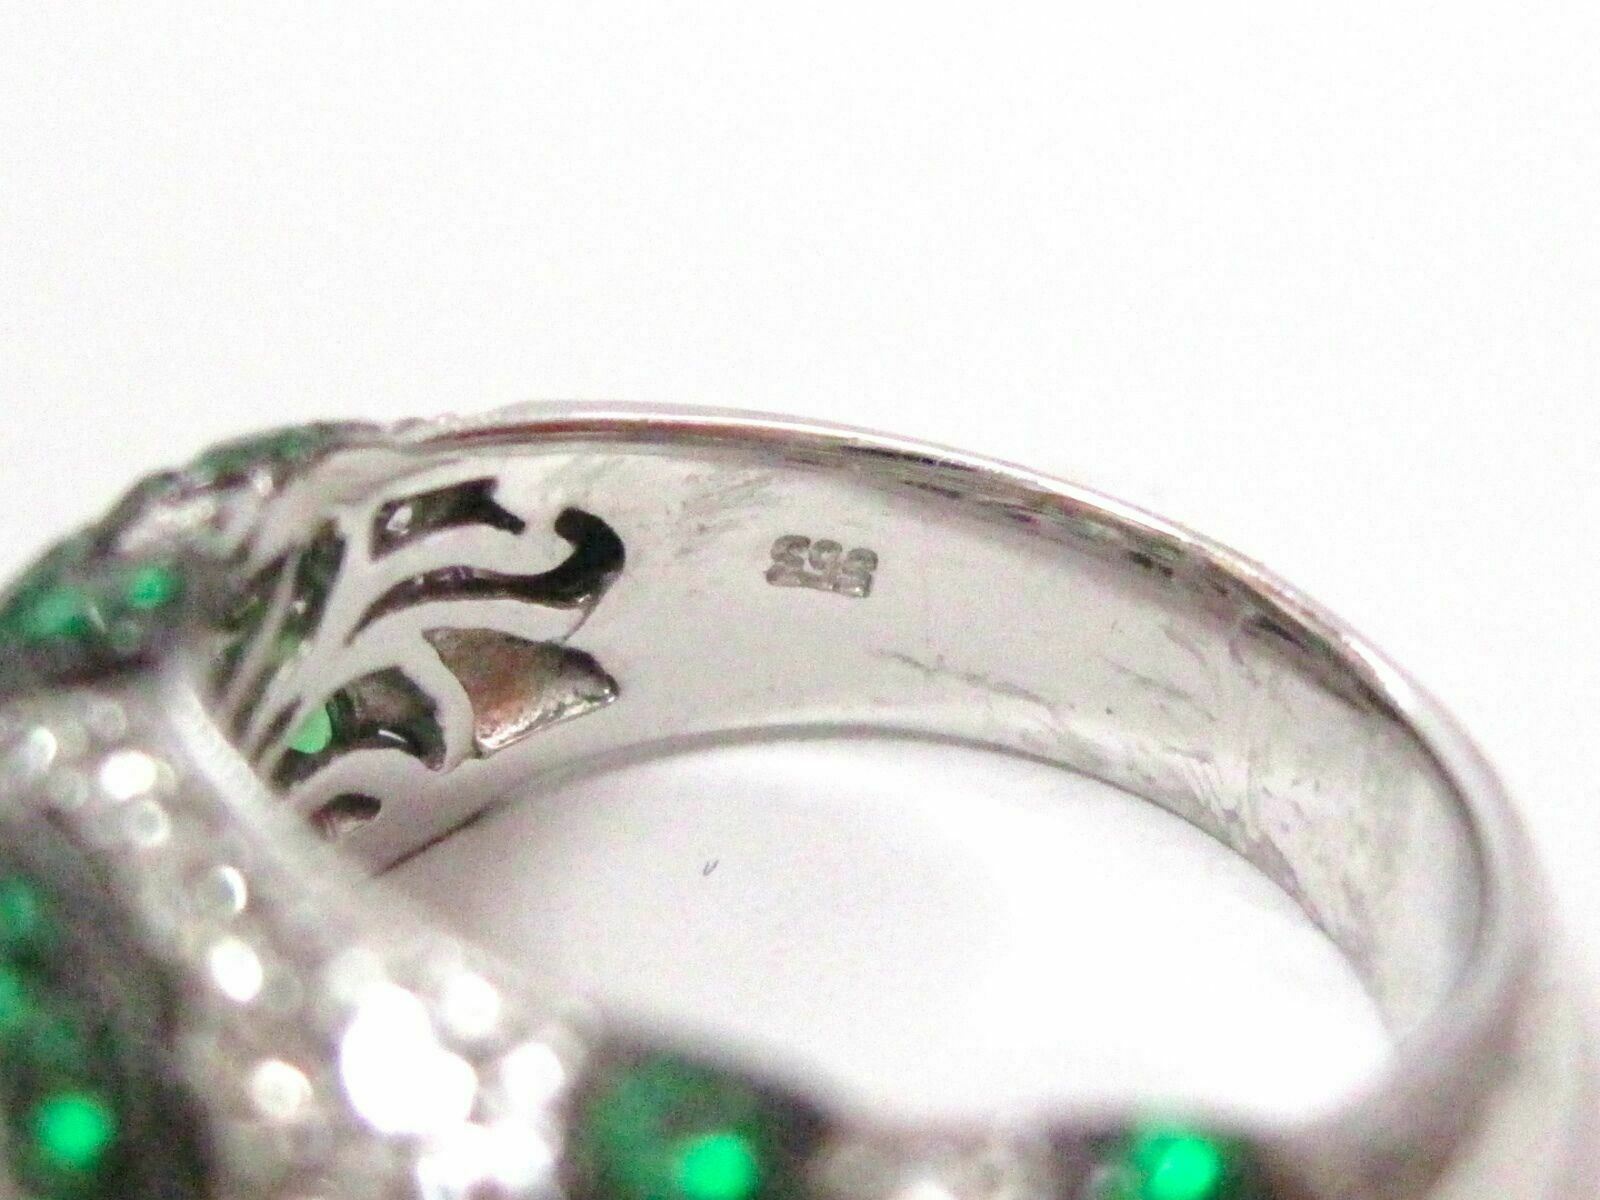 2.31 TCW Round Green Tsavorite Garnet & White Diamond Accents Ring Size 7 14k